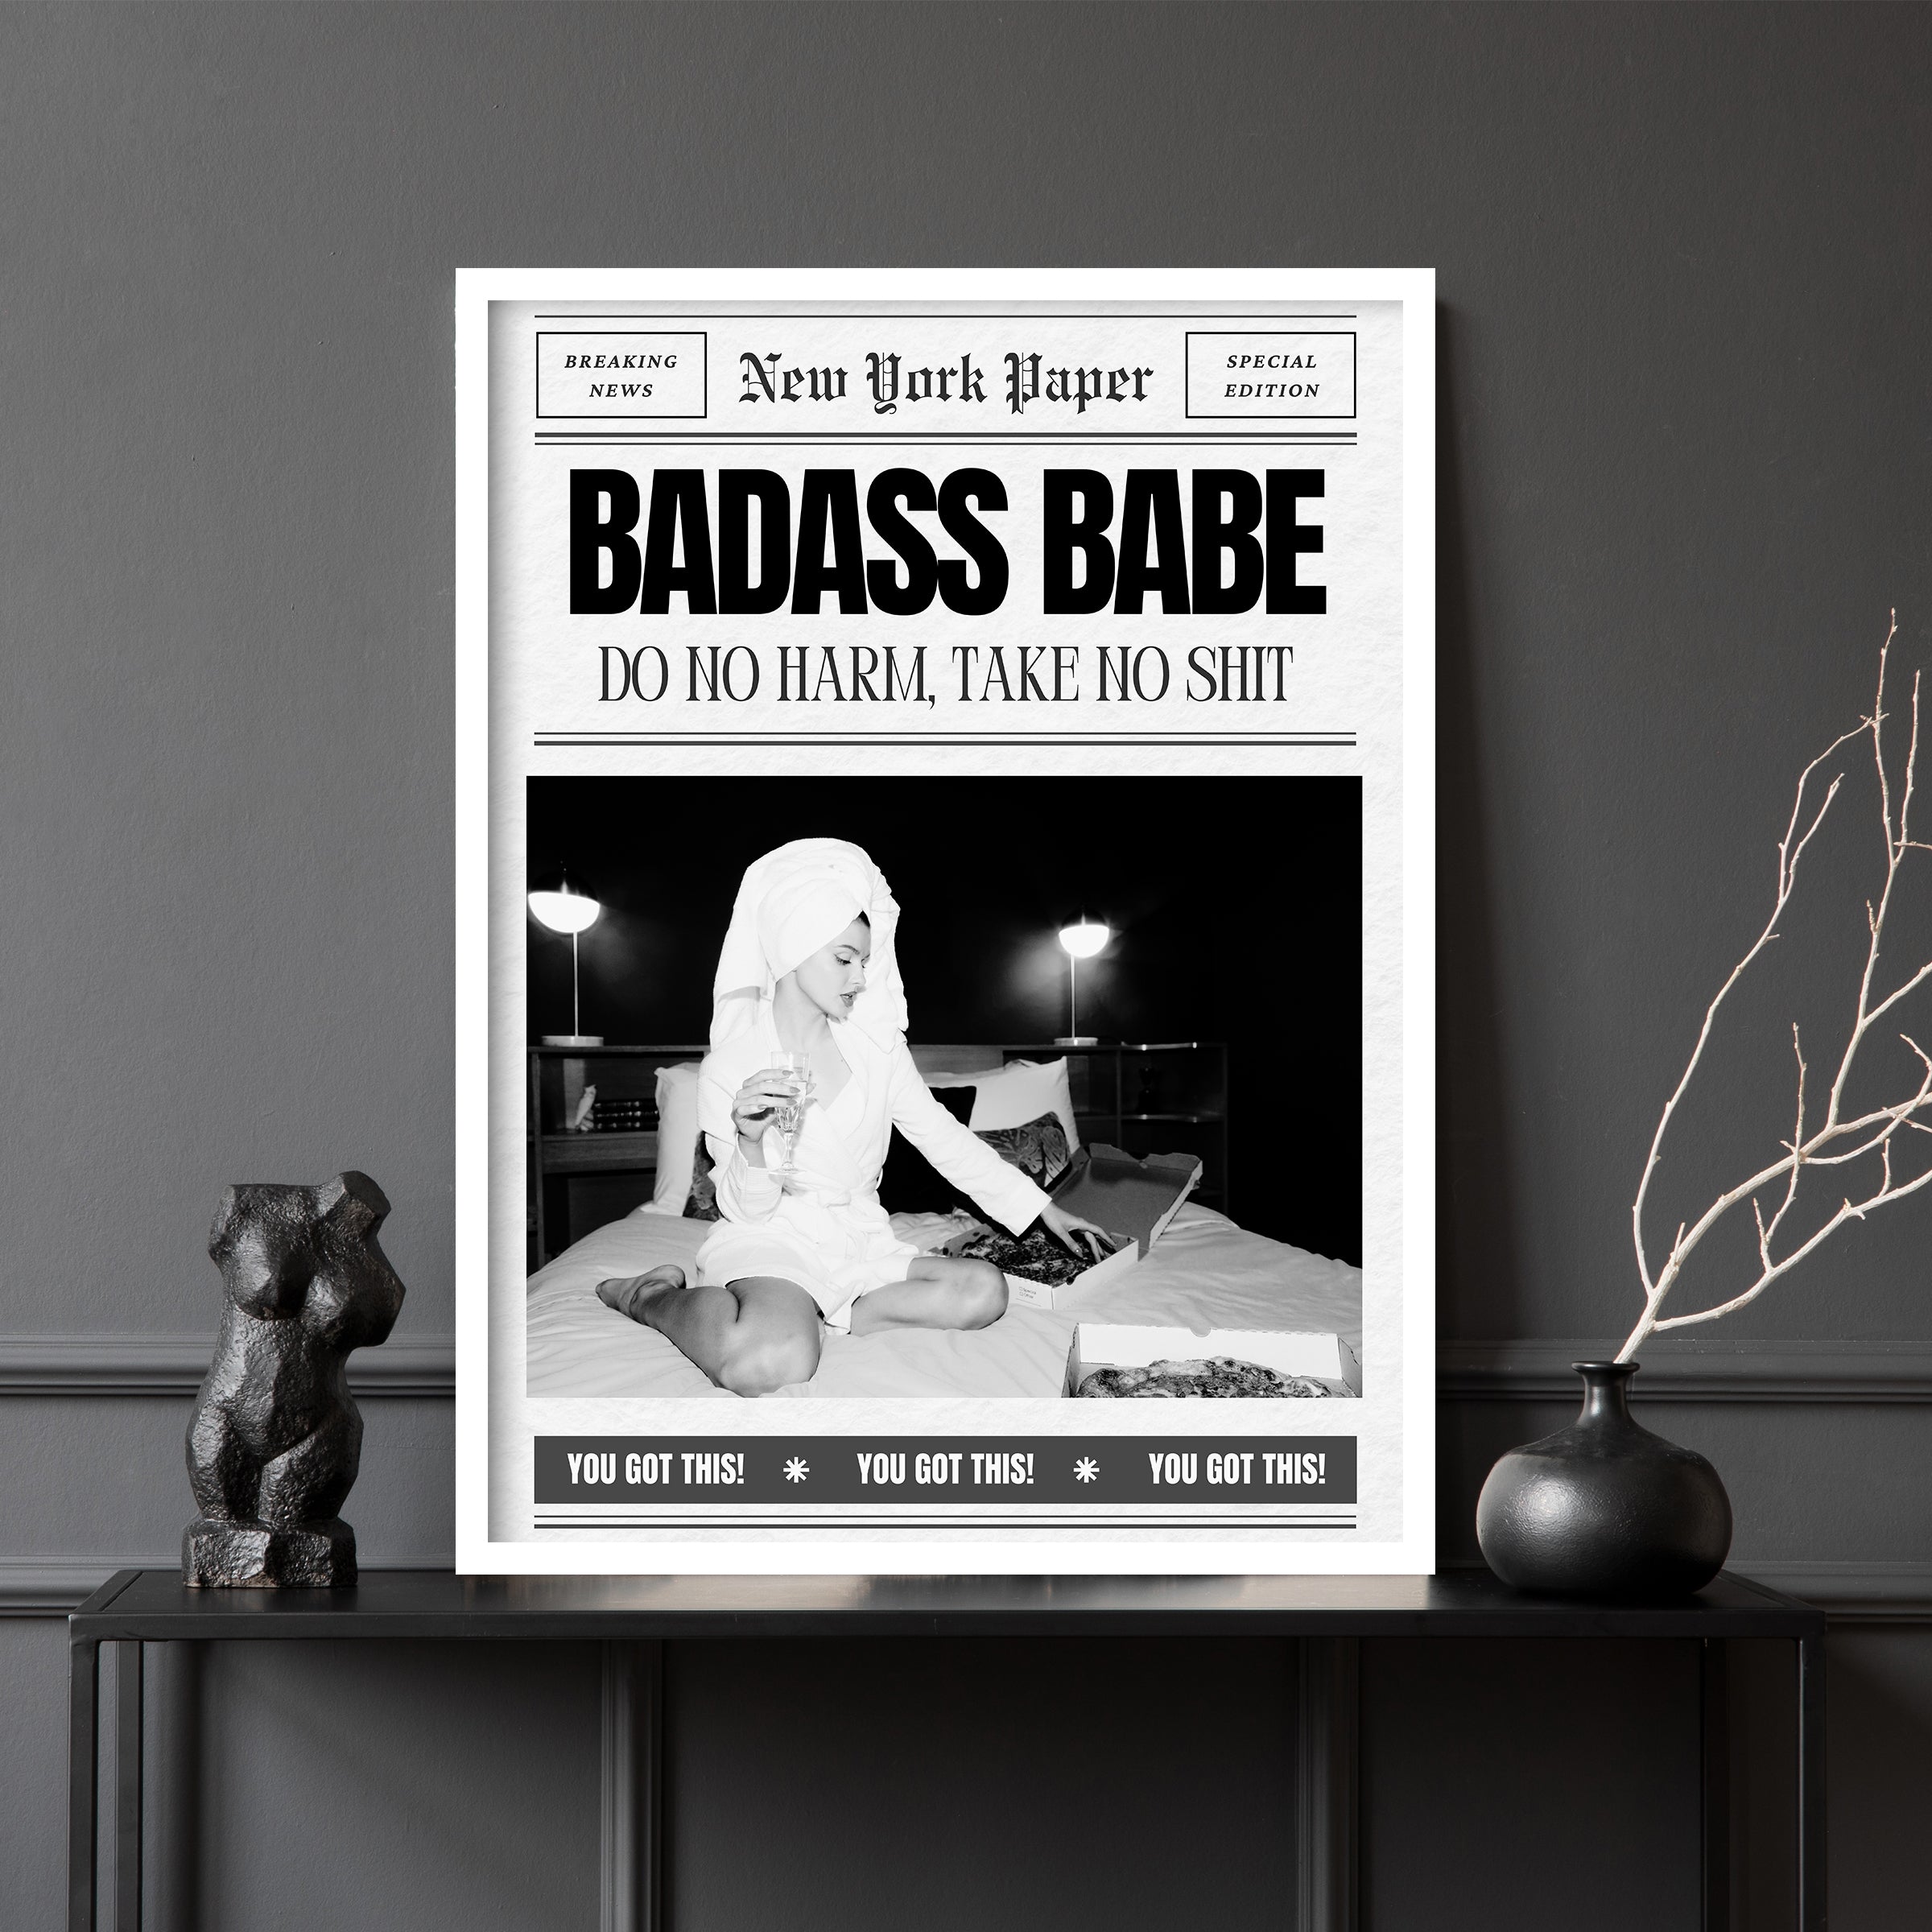 Badass Babe Newspaper Article Poster